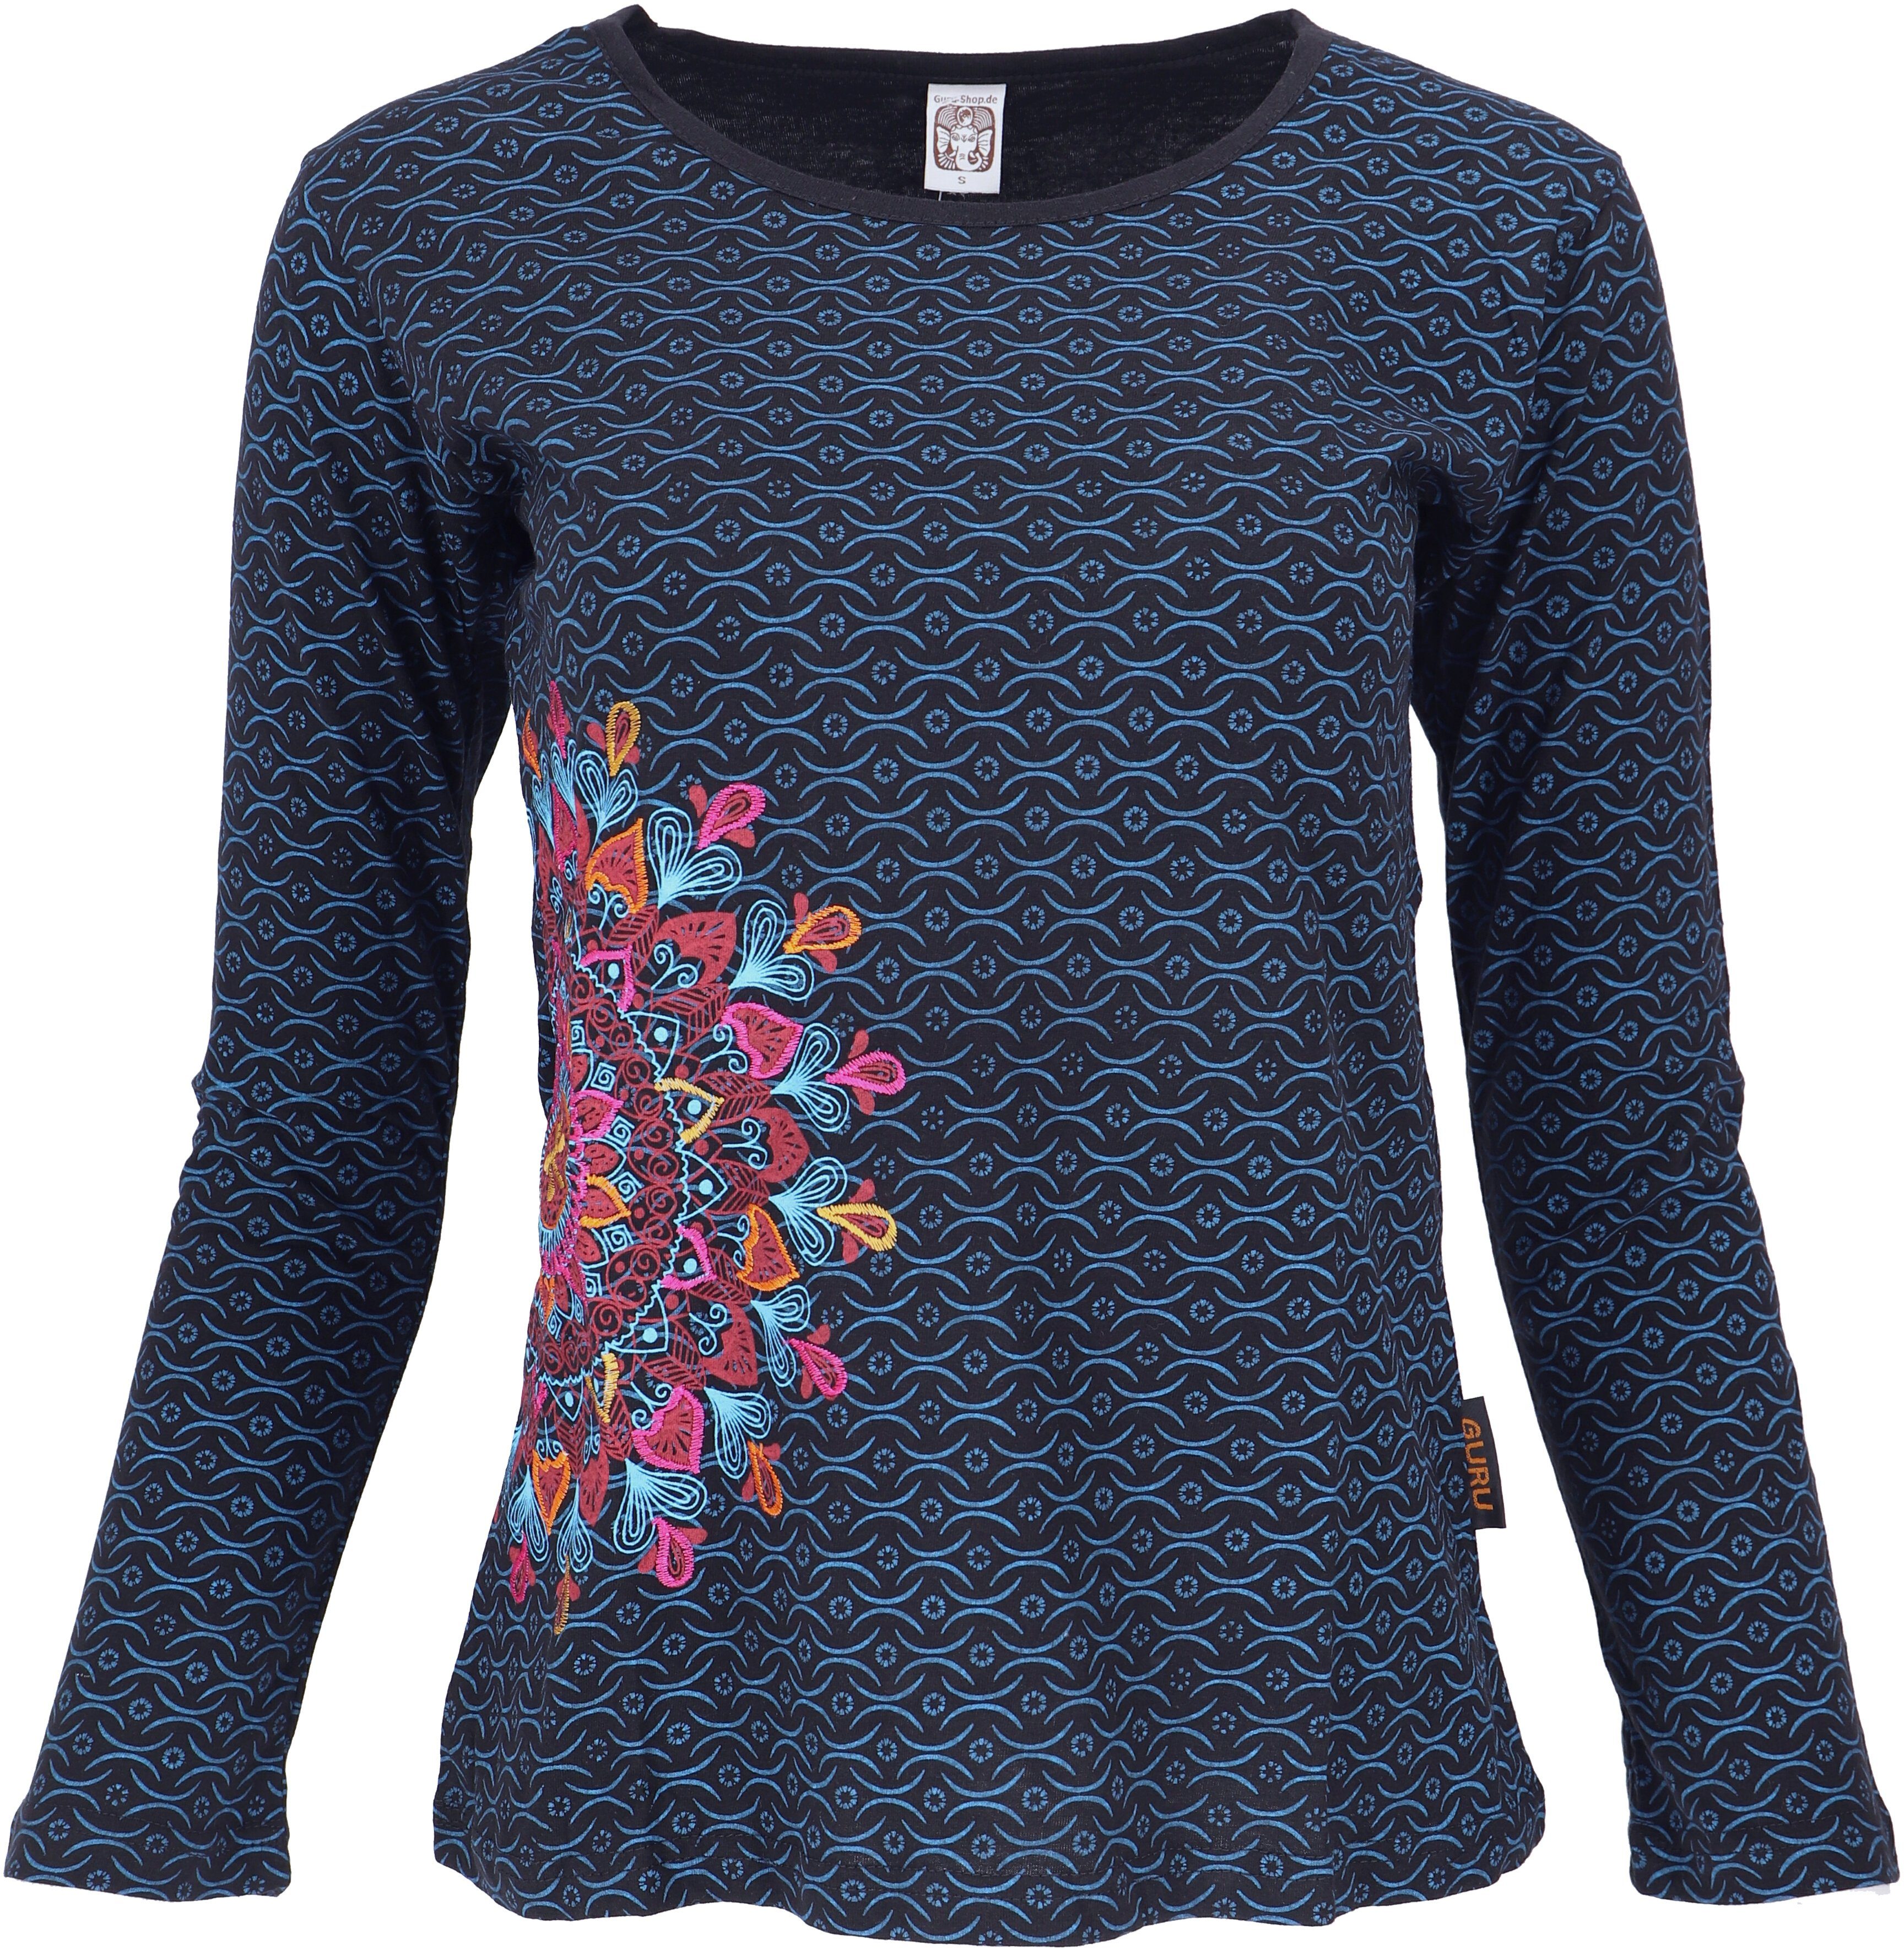 Guru-Shop Longsleeve Besticktes Langarmshirt Boho chic Retro -.. alternative Bekleidung schwarz/blau